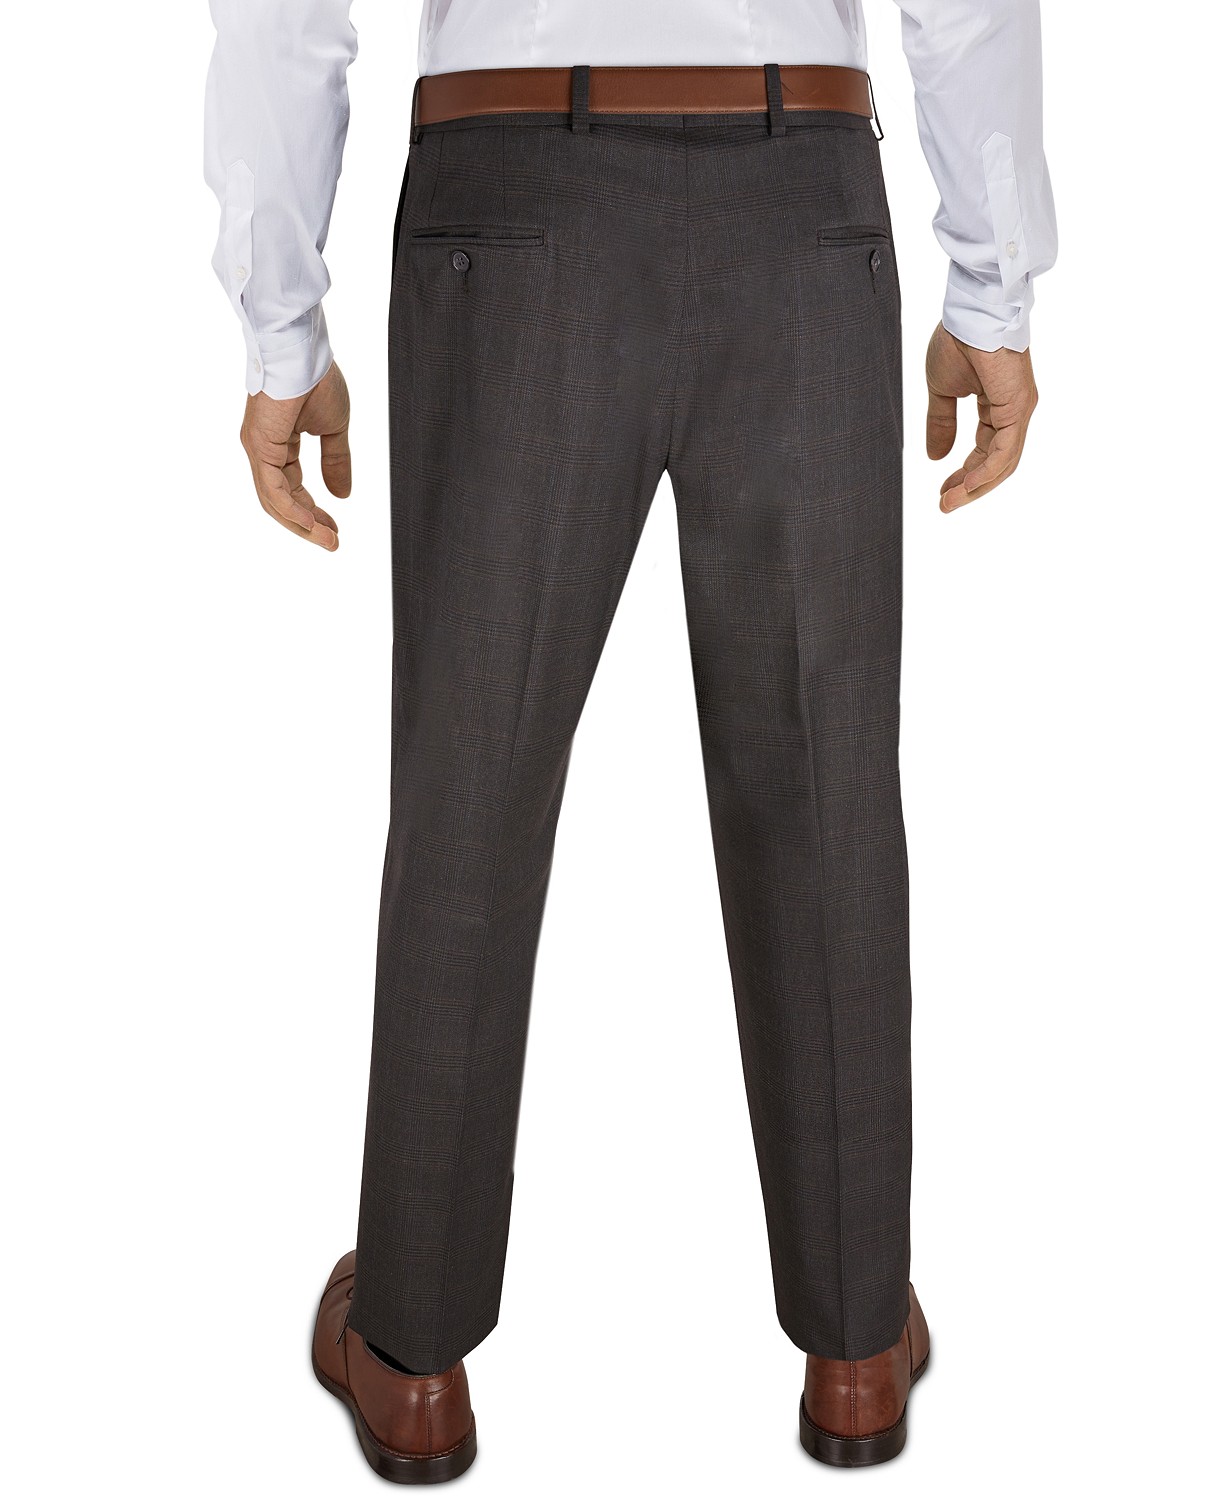 www.couturepoint.com-lauren-ralph-lauren-mens-brown-classic-fit-check-pattern-dress-pants